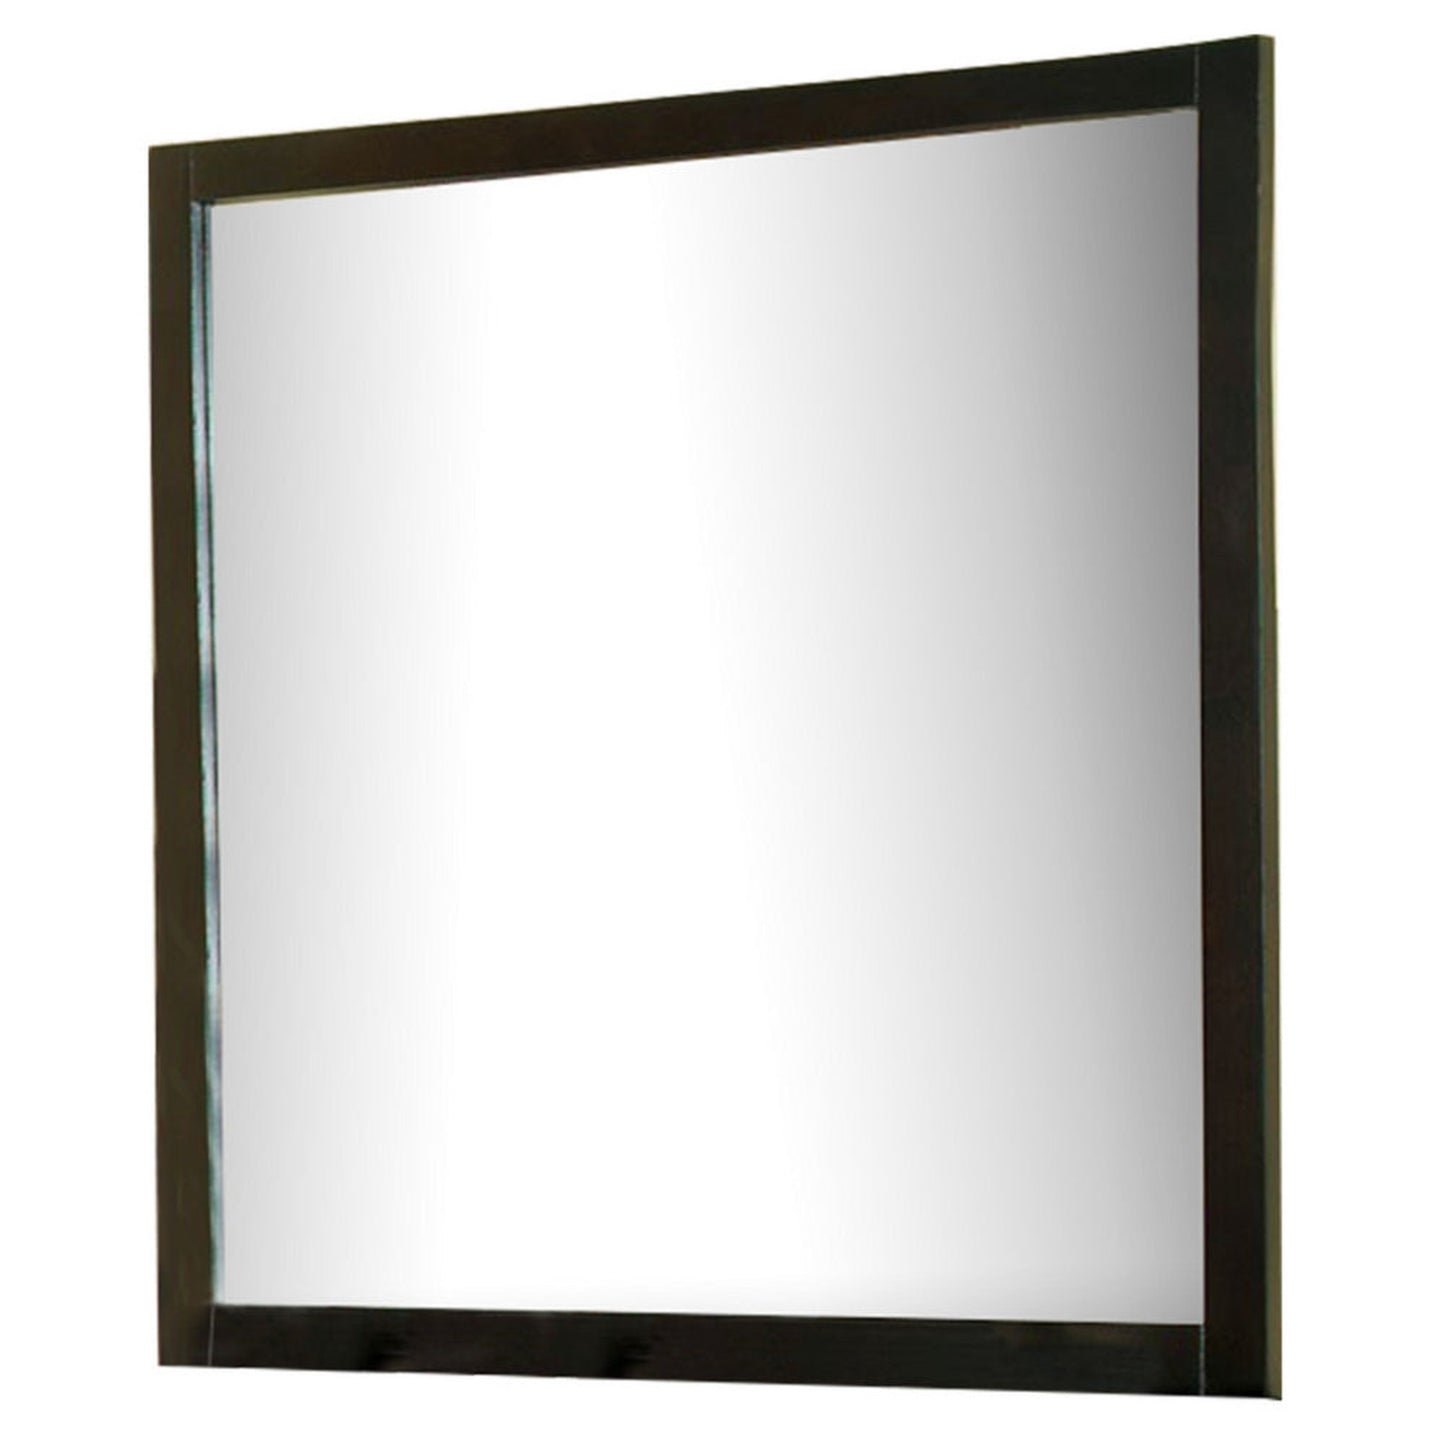 Benzara 40" Espresso Brown Square Wooden Framed Wall Mirror